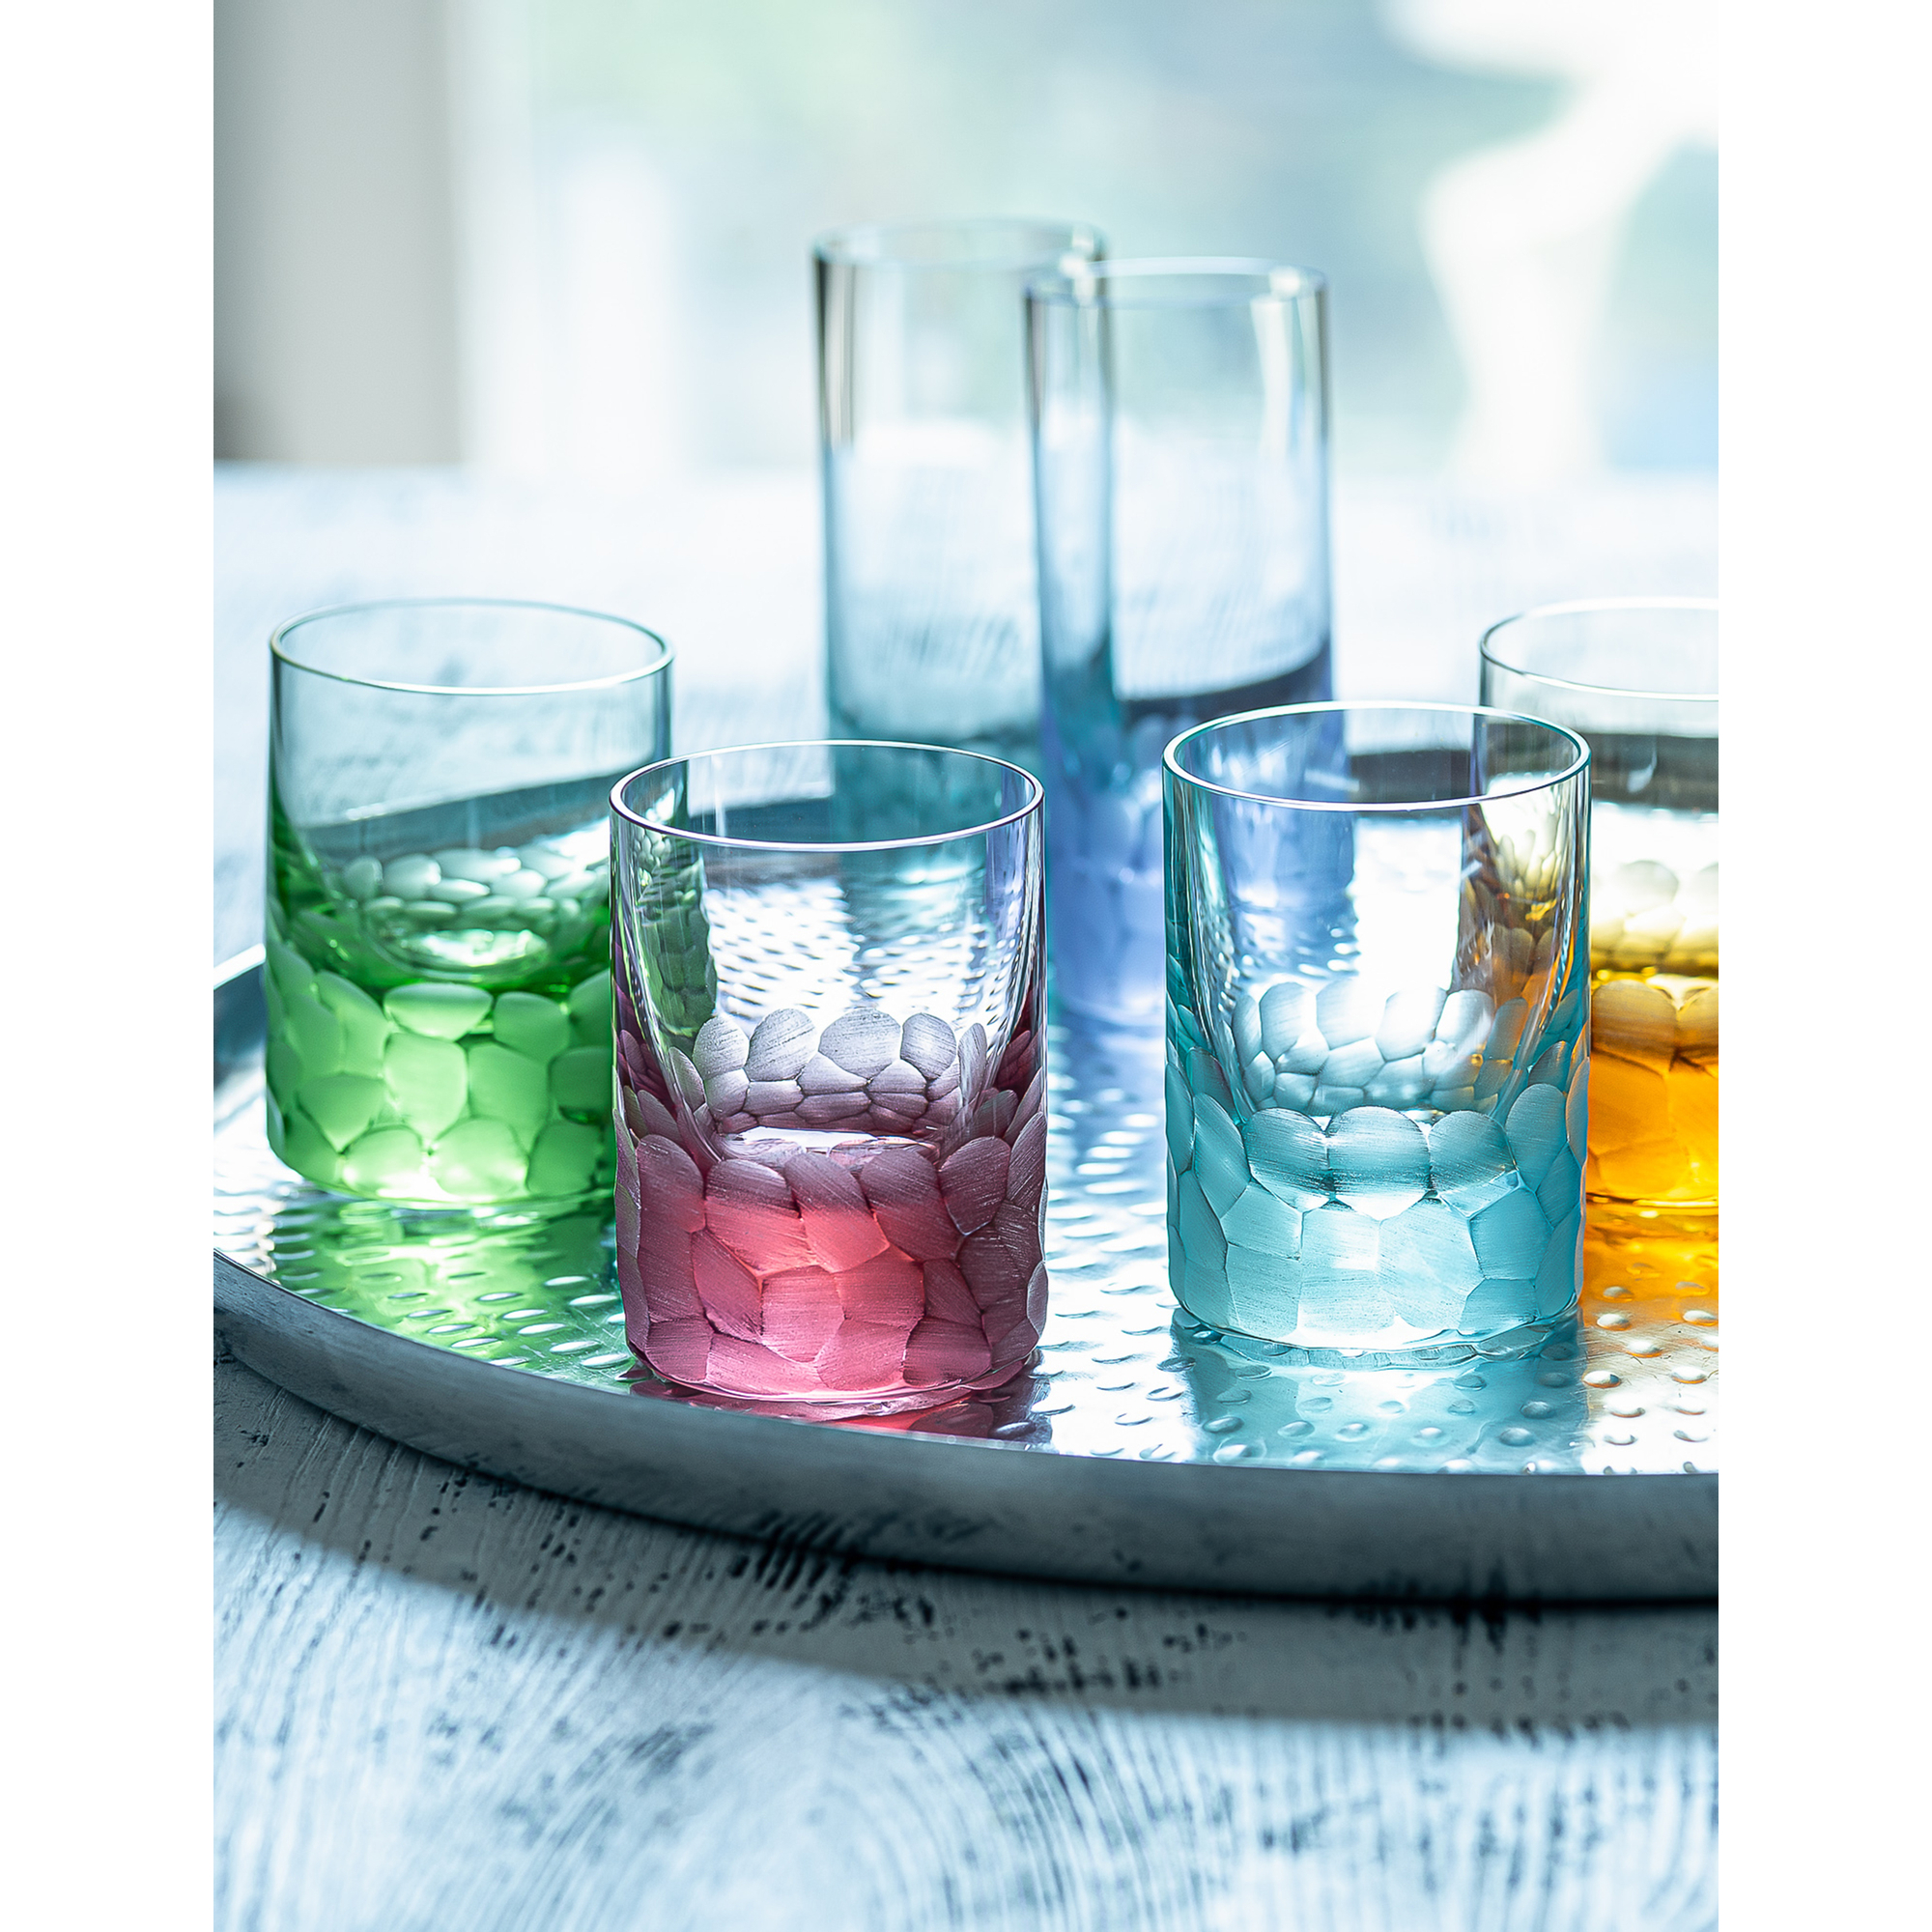 Bohemian crystal shot glass 60 ml for spirit by Moser